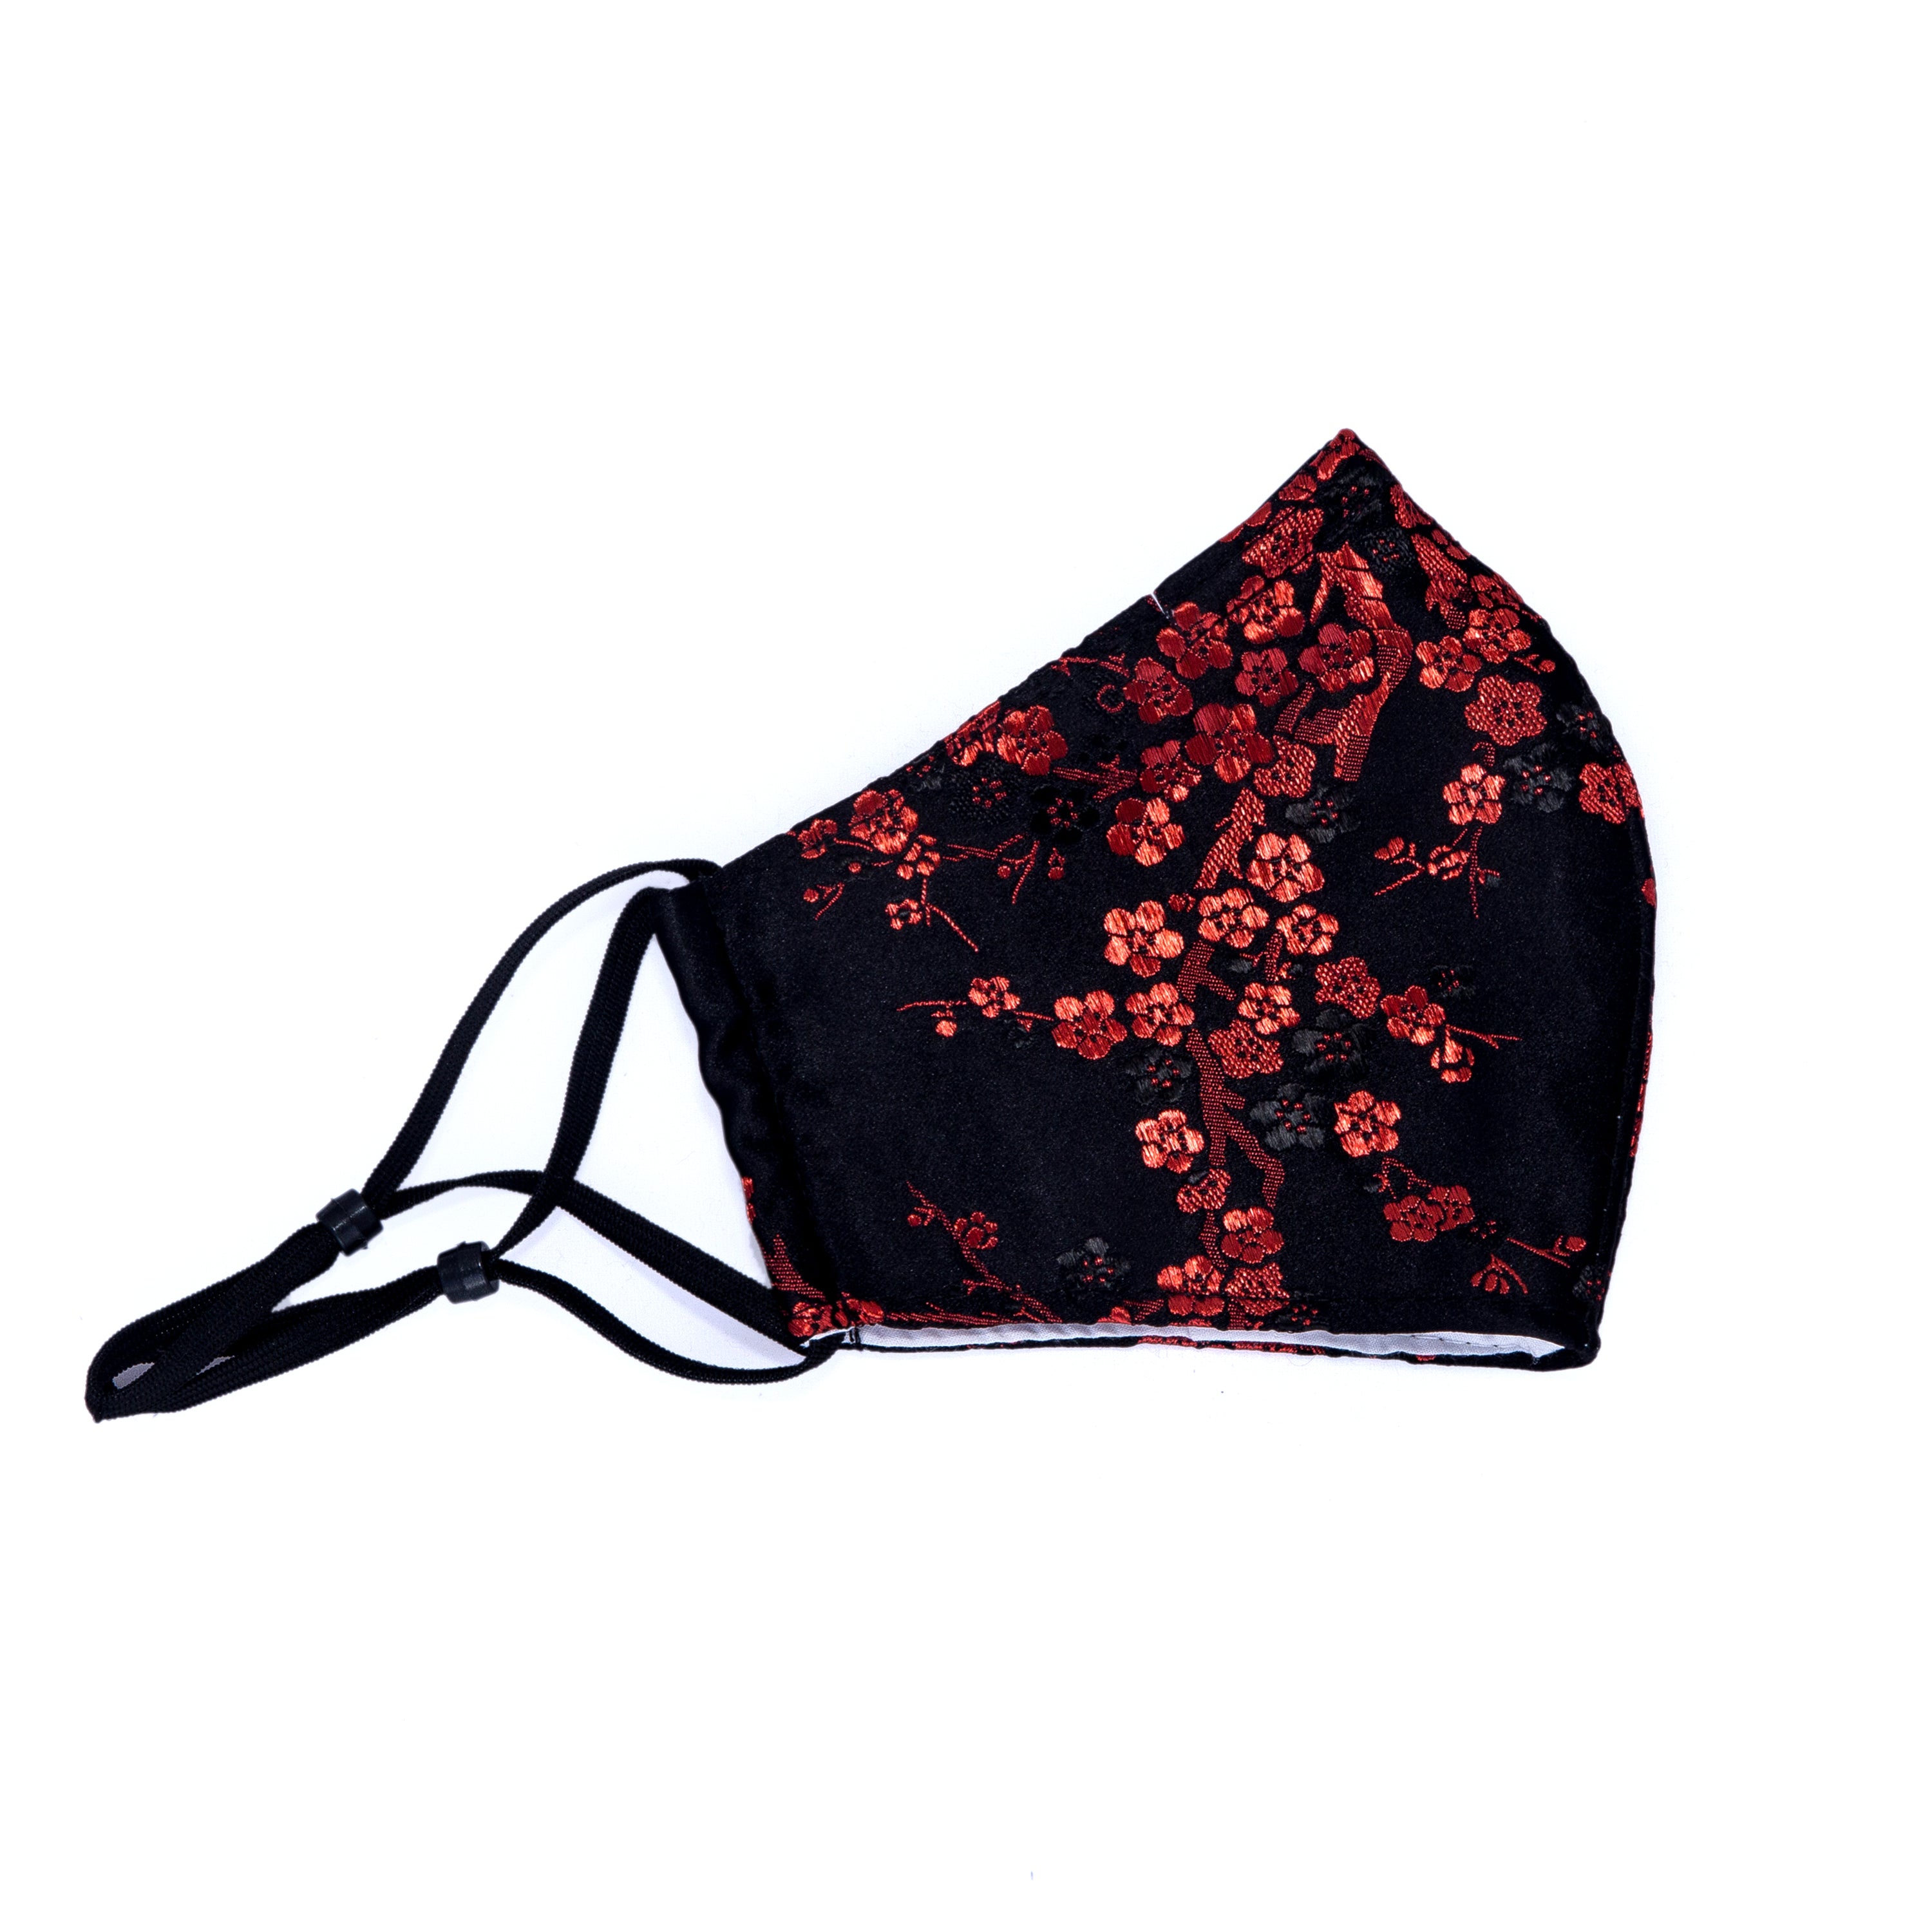 Floral Pattern Cotton+Silk Mask